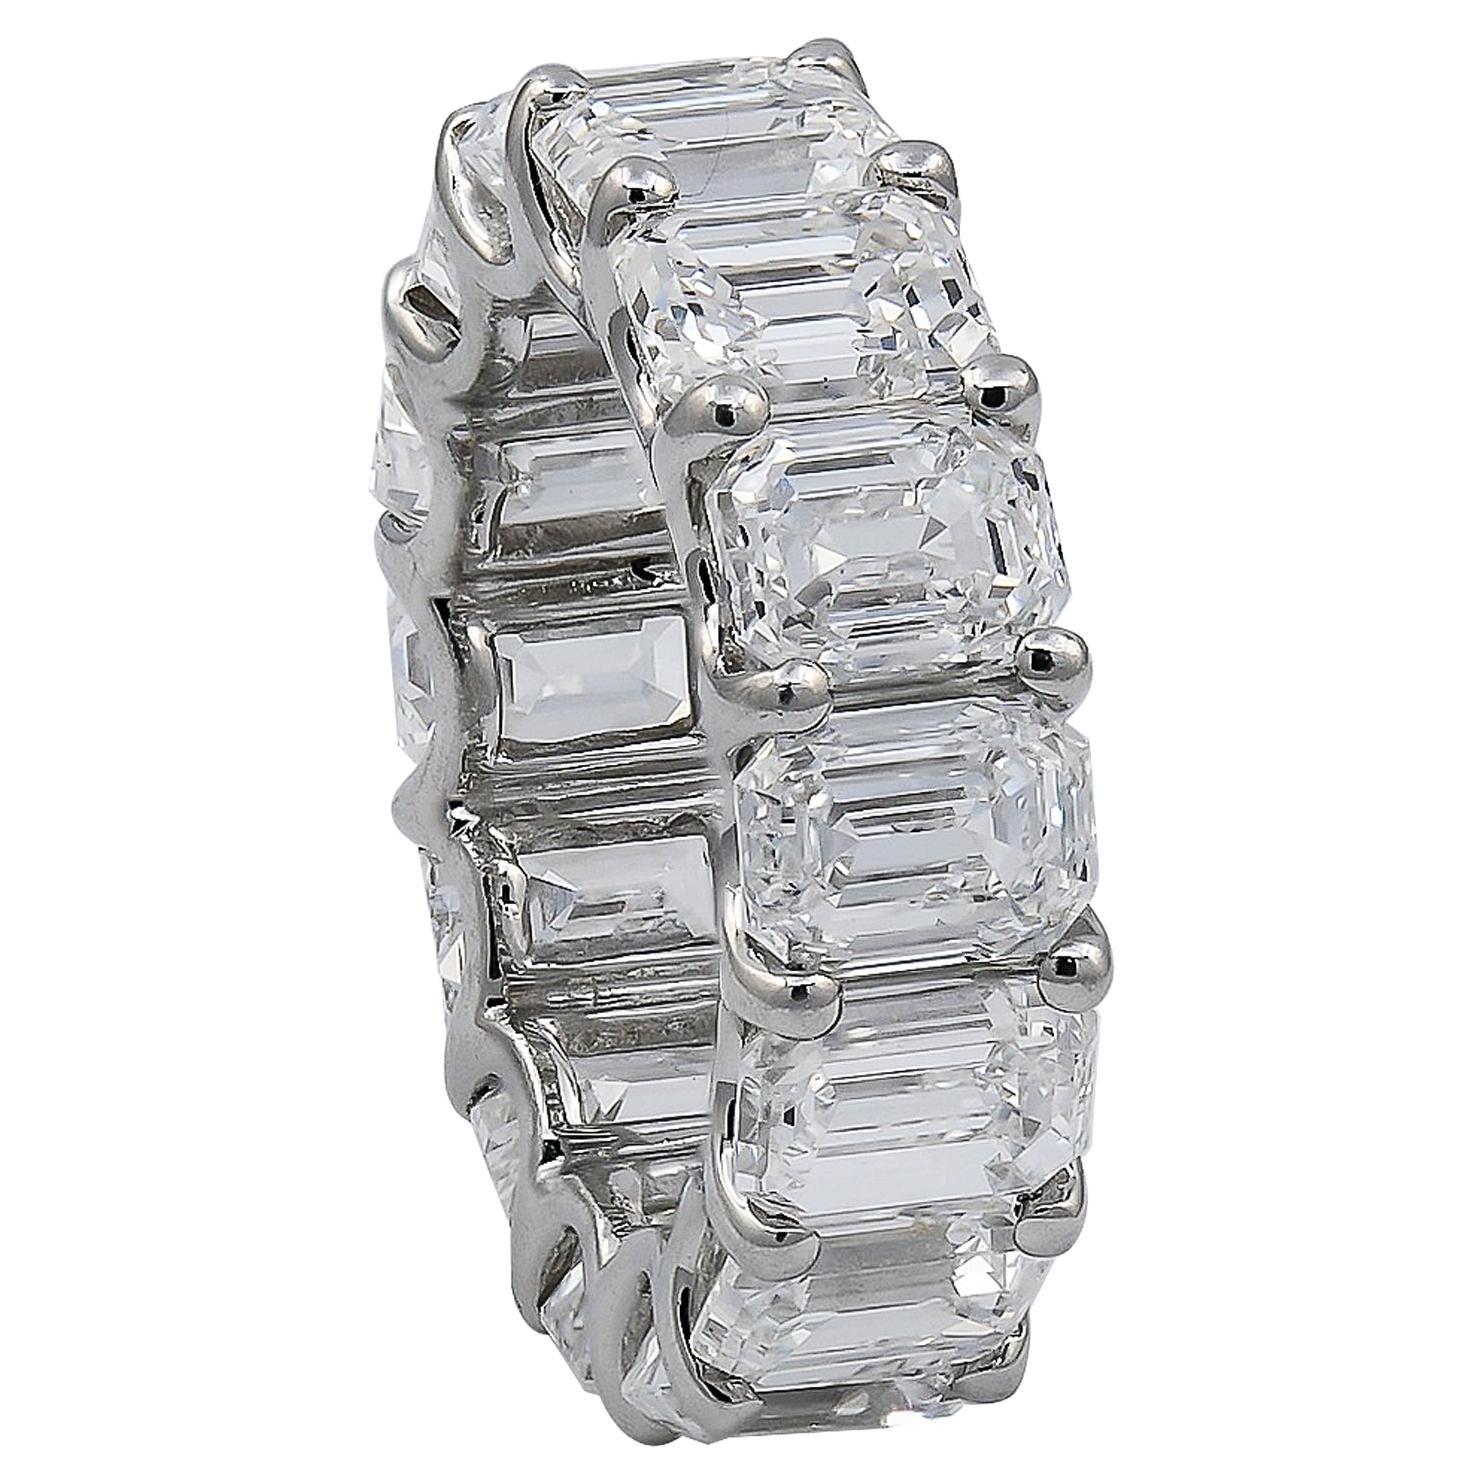 Spectra Fine Jewelry GIA Certified 14.23 Carat Diamond Platinum Wedding Ring